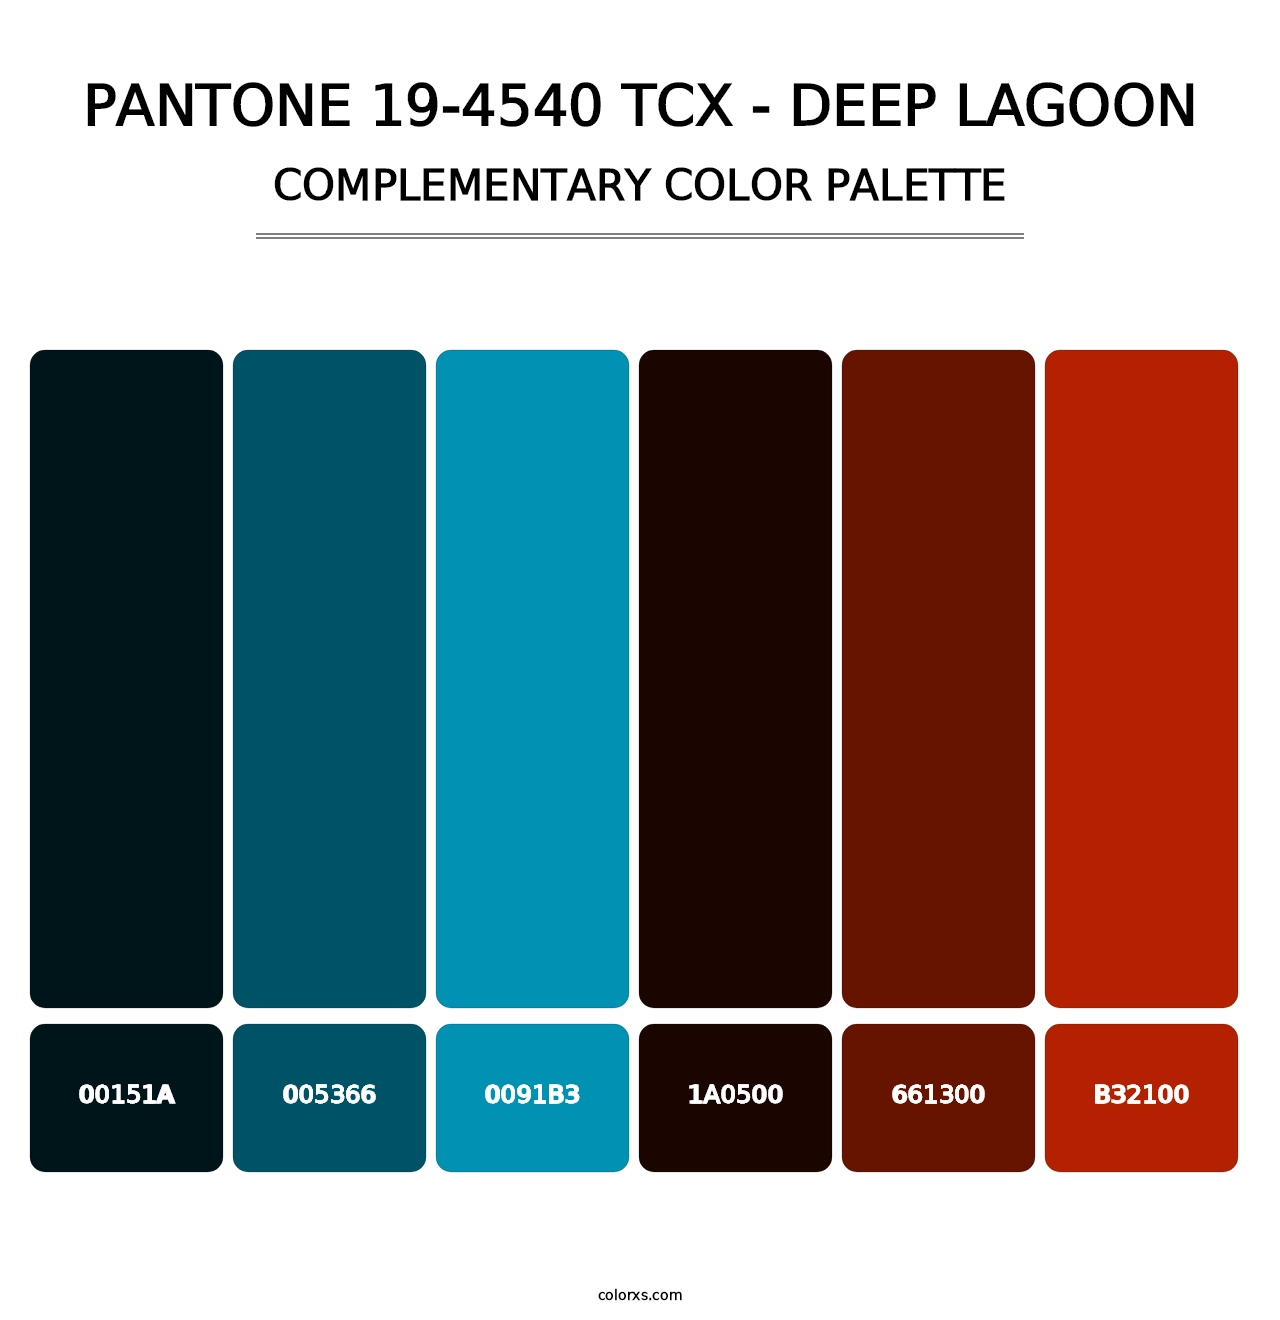 PANTONE 19-4540 TCX - Deep Lagoon - Complementary Color Palette